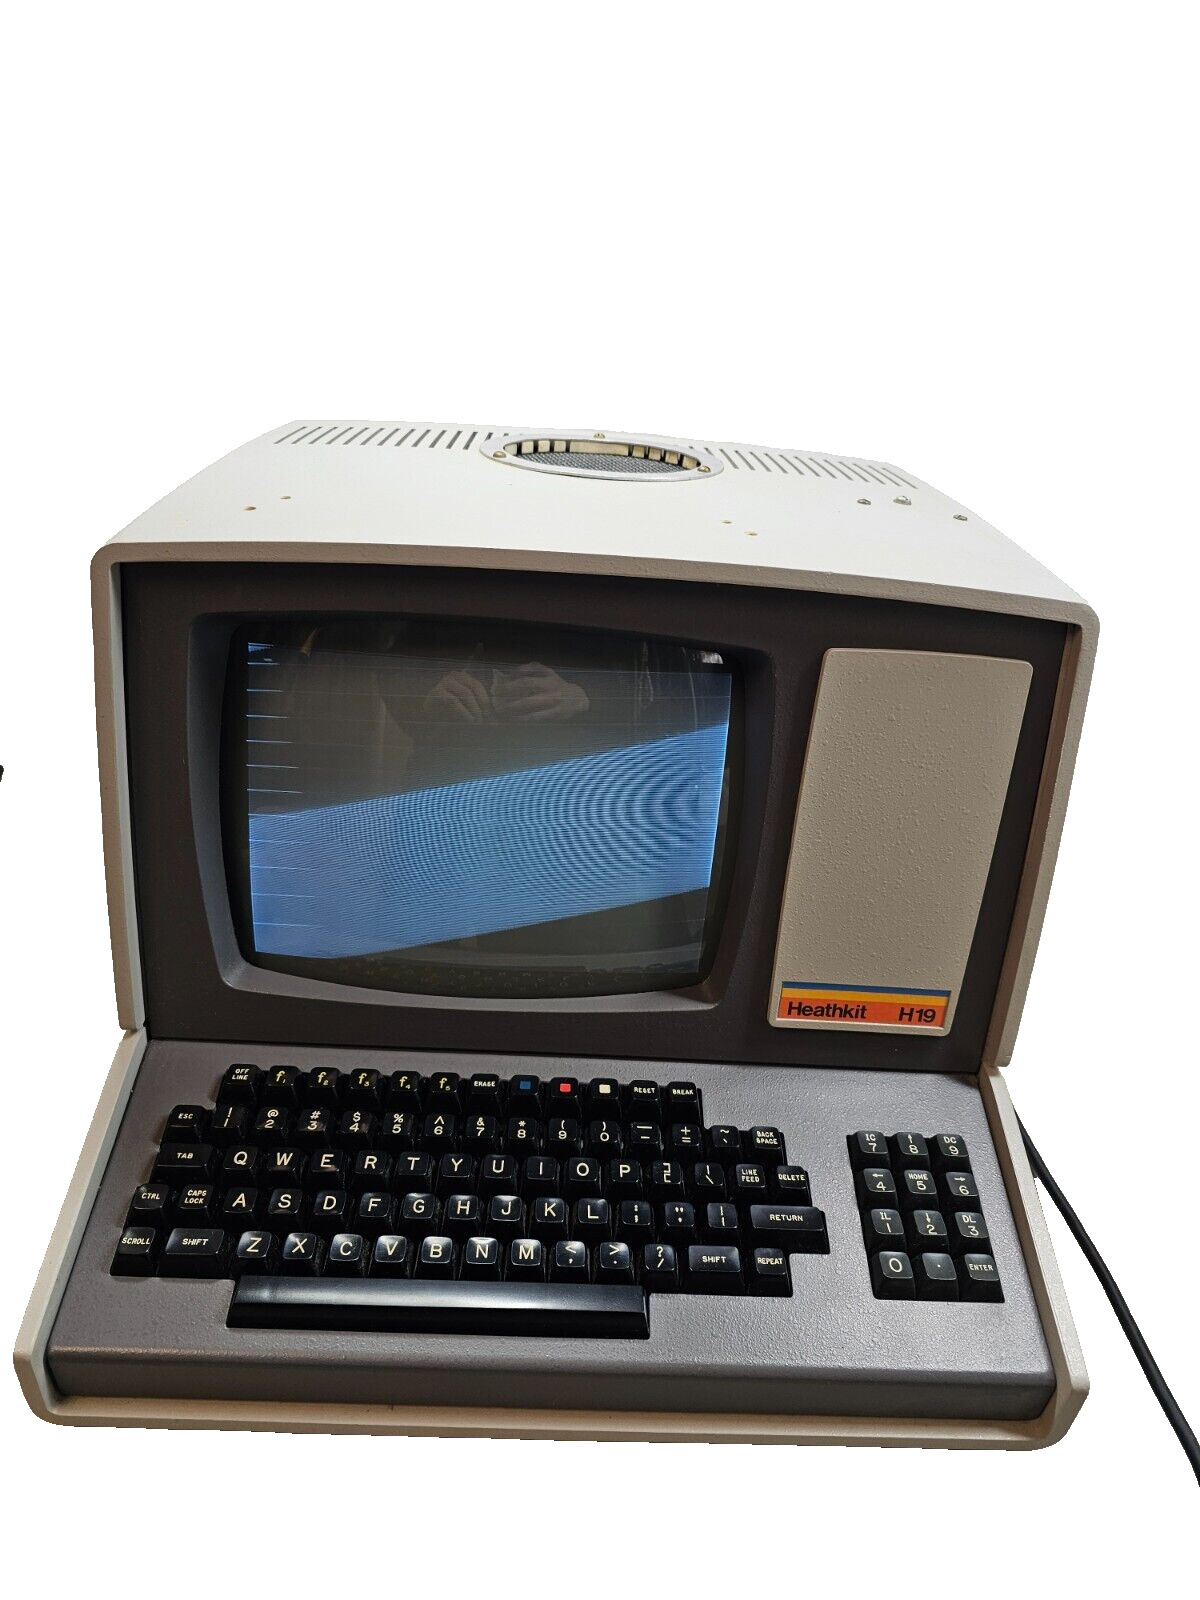 Vintage Heathkit H19 Advanced Video Terminal Computer - Tested Great shape.